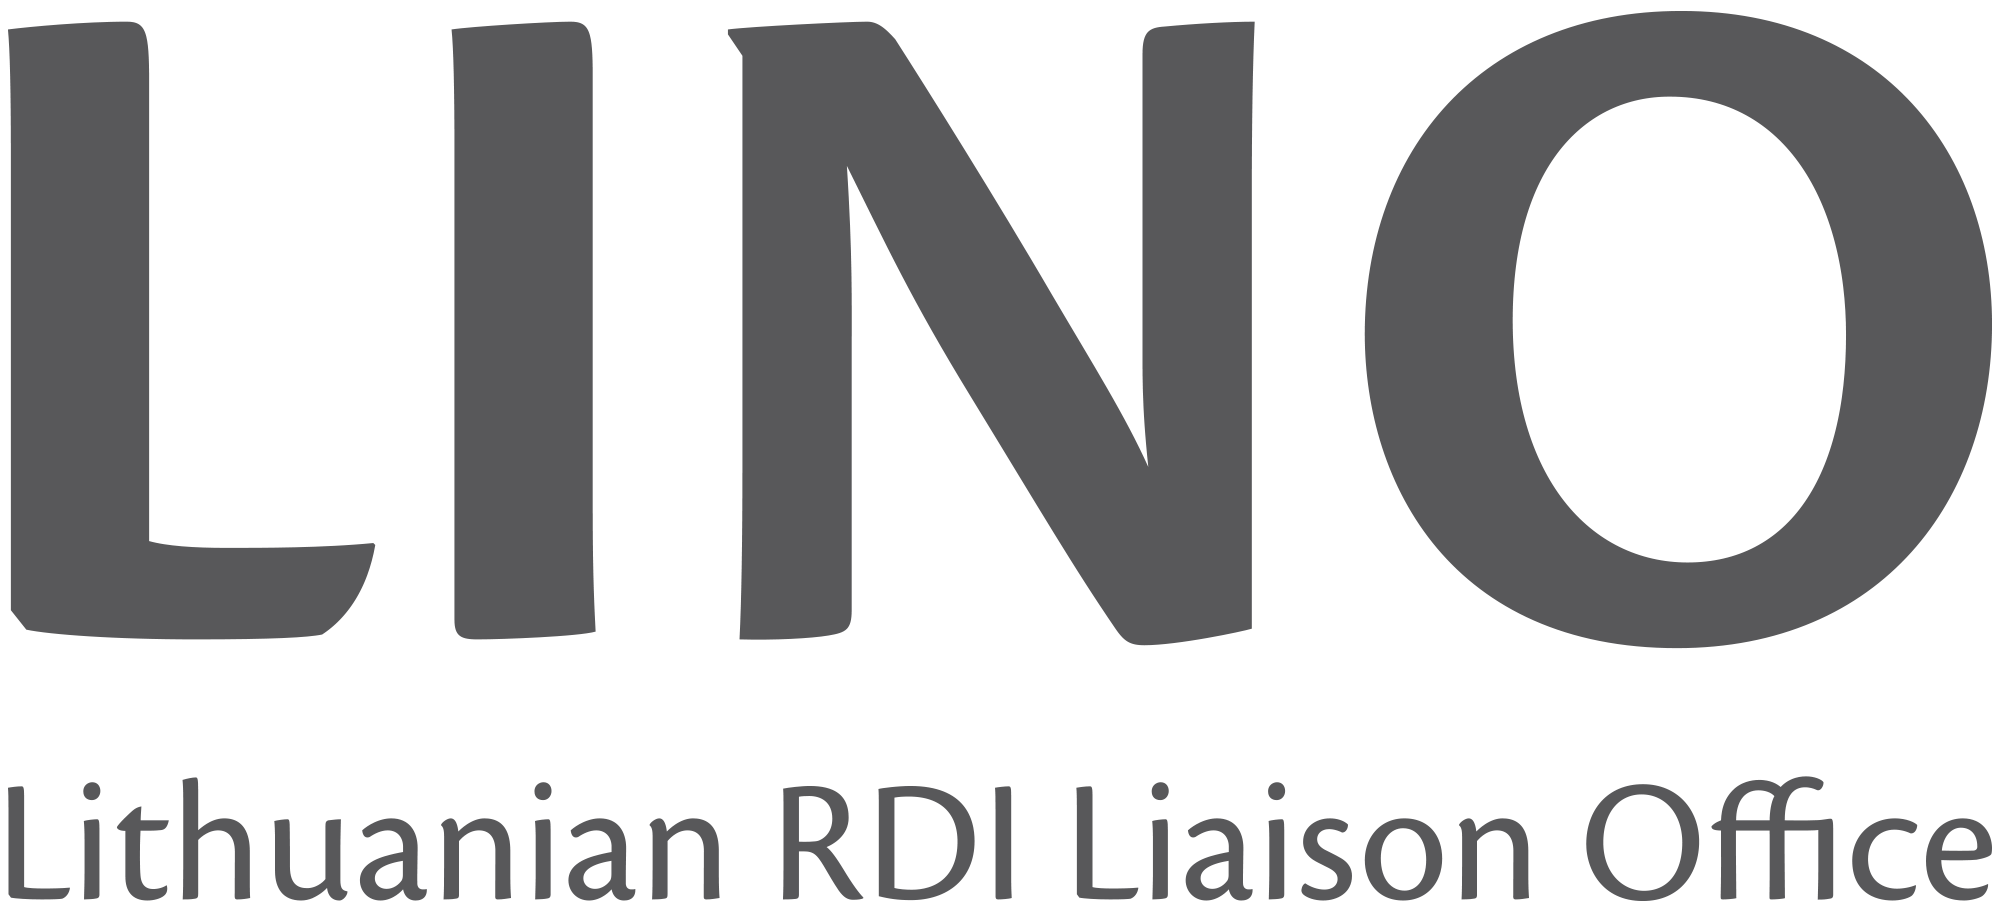 Lithuanian RDI Liaison Office LINO